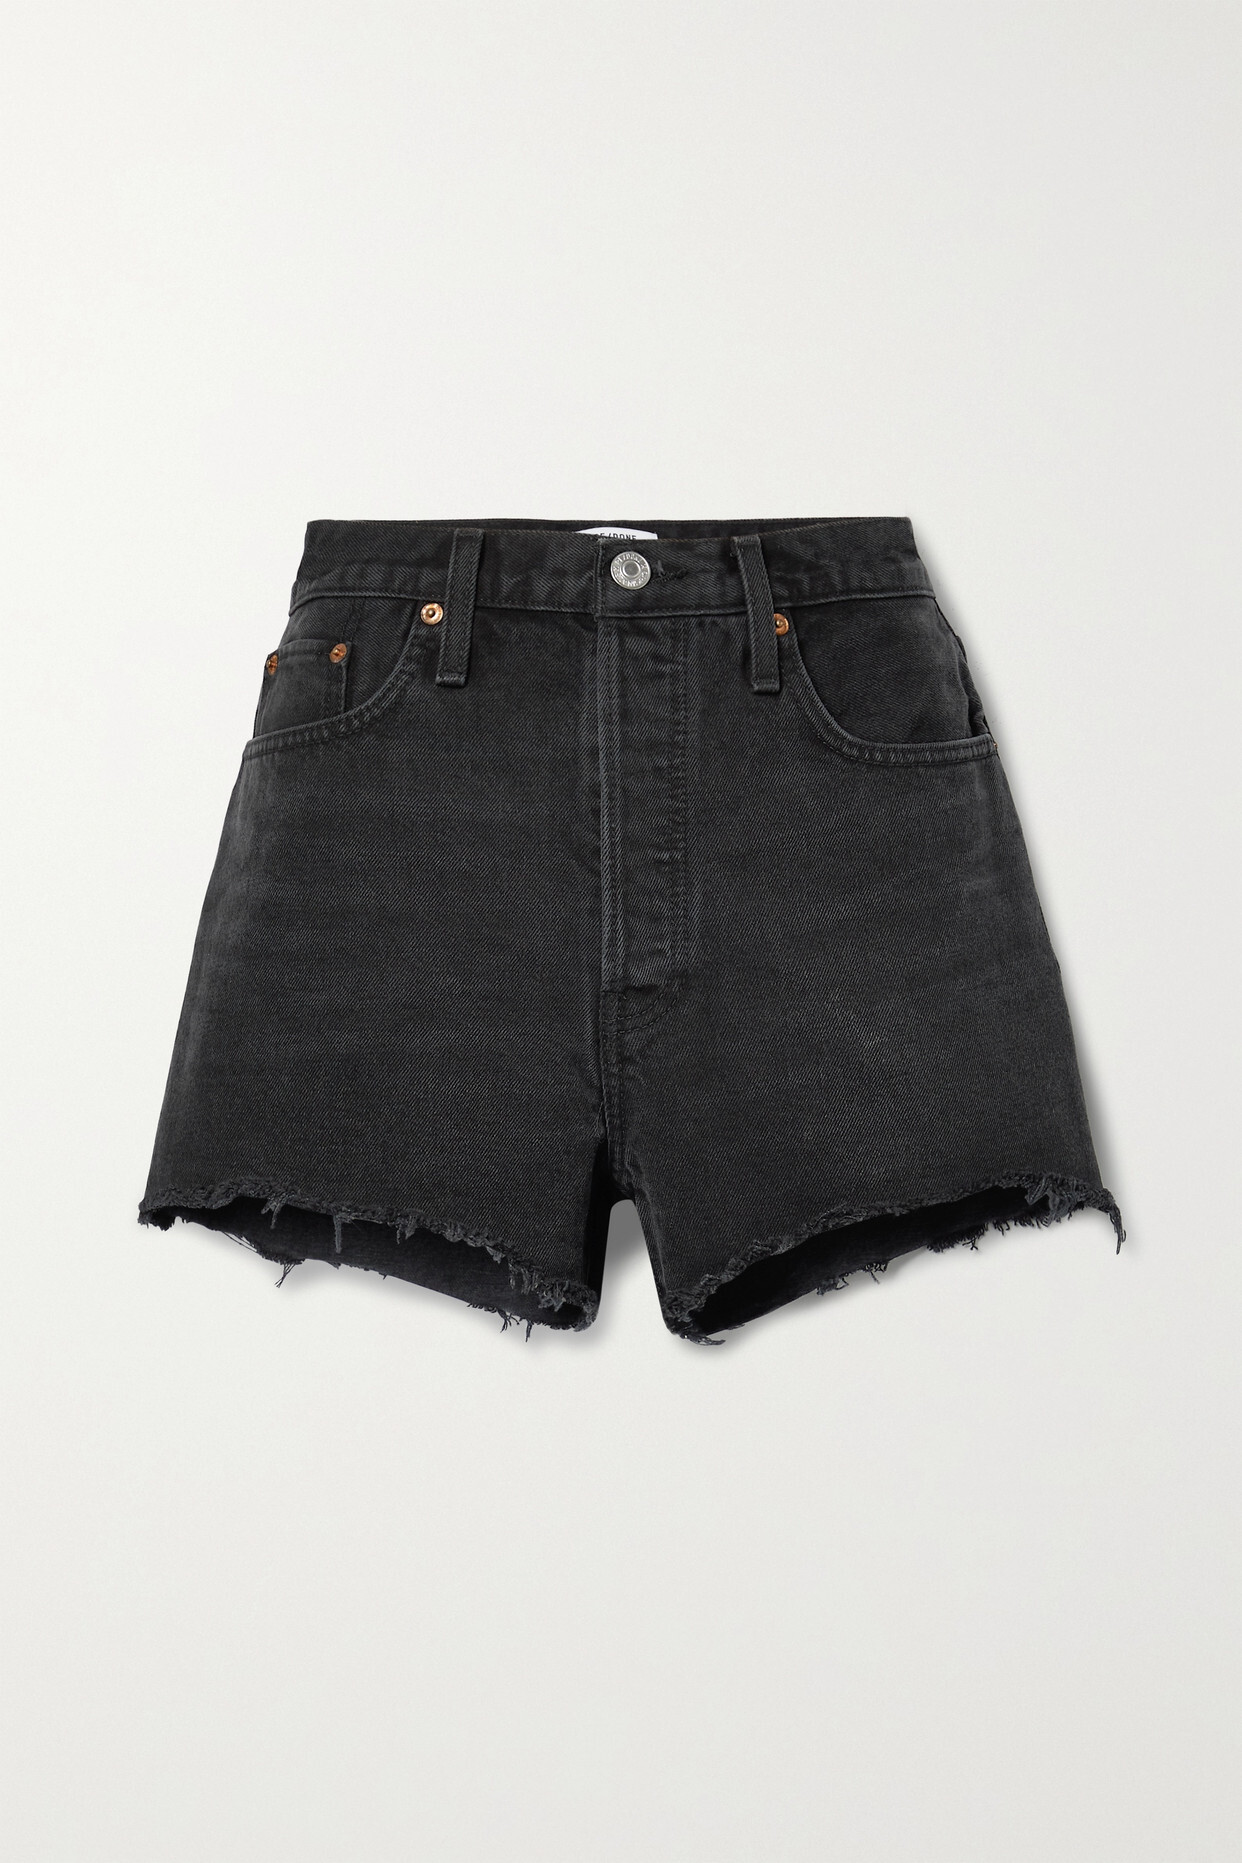 RE/DONE - 70s Frayed Denim Shorts - Black